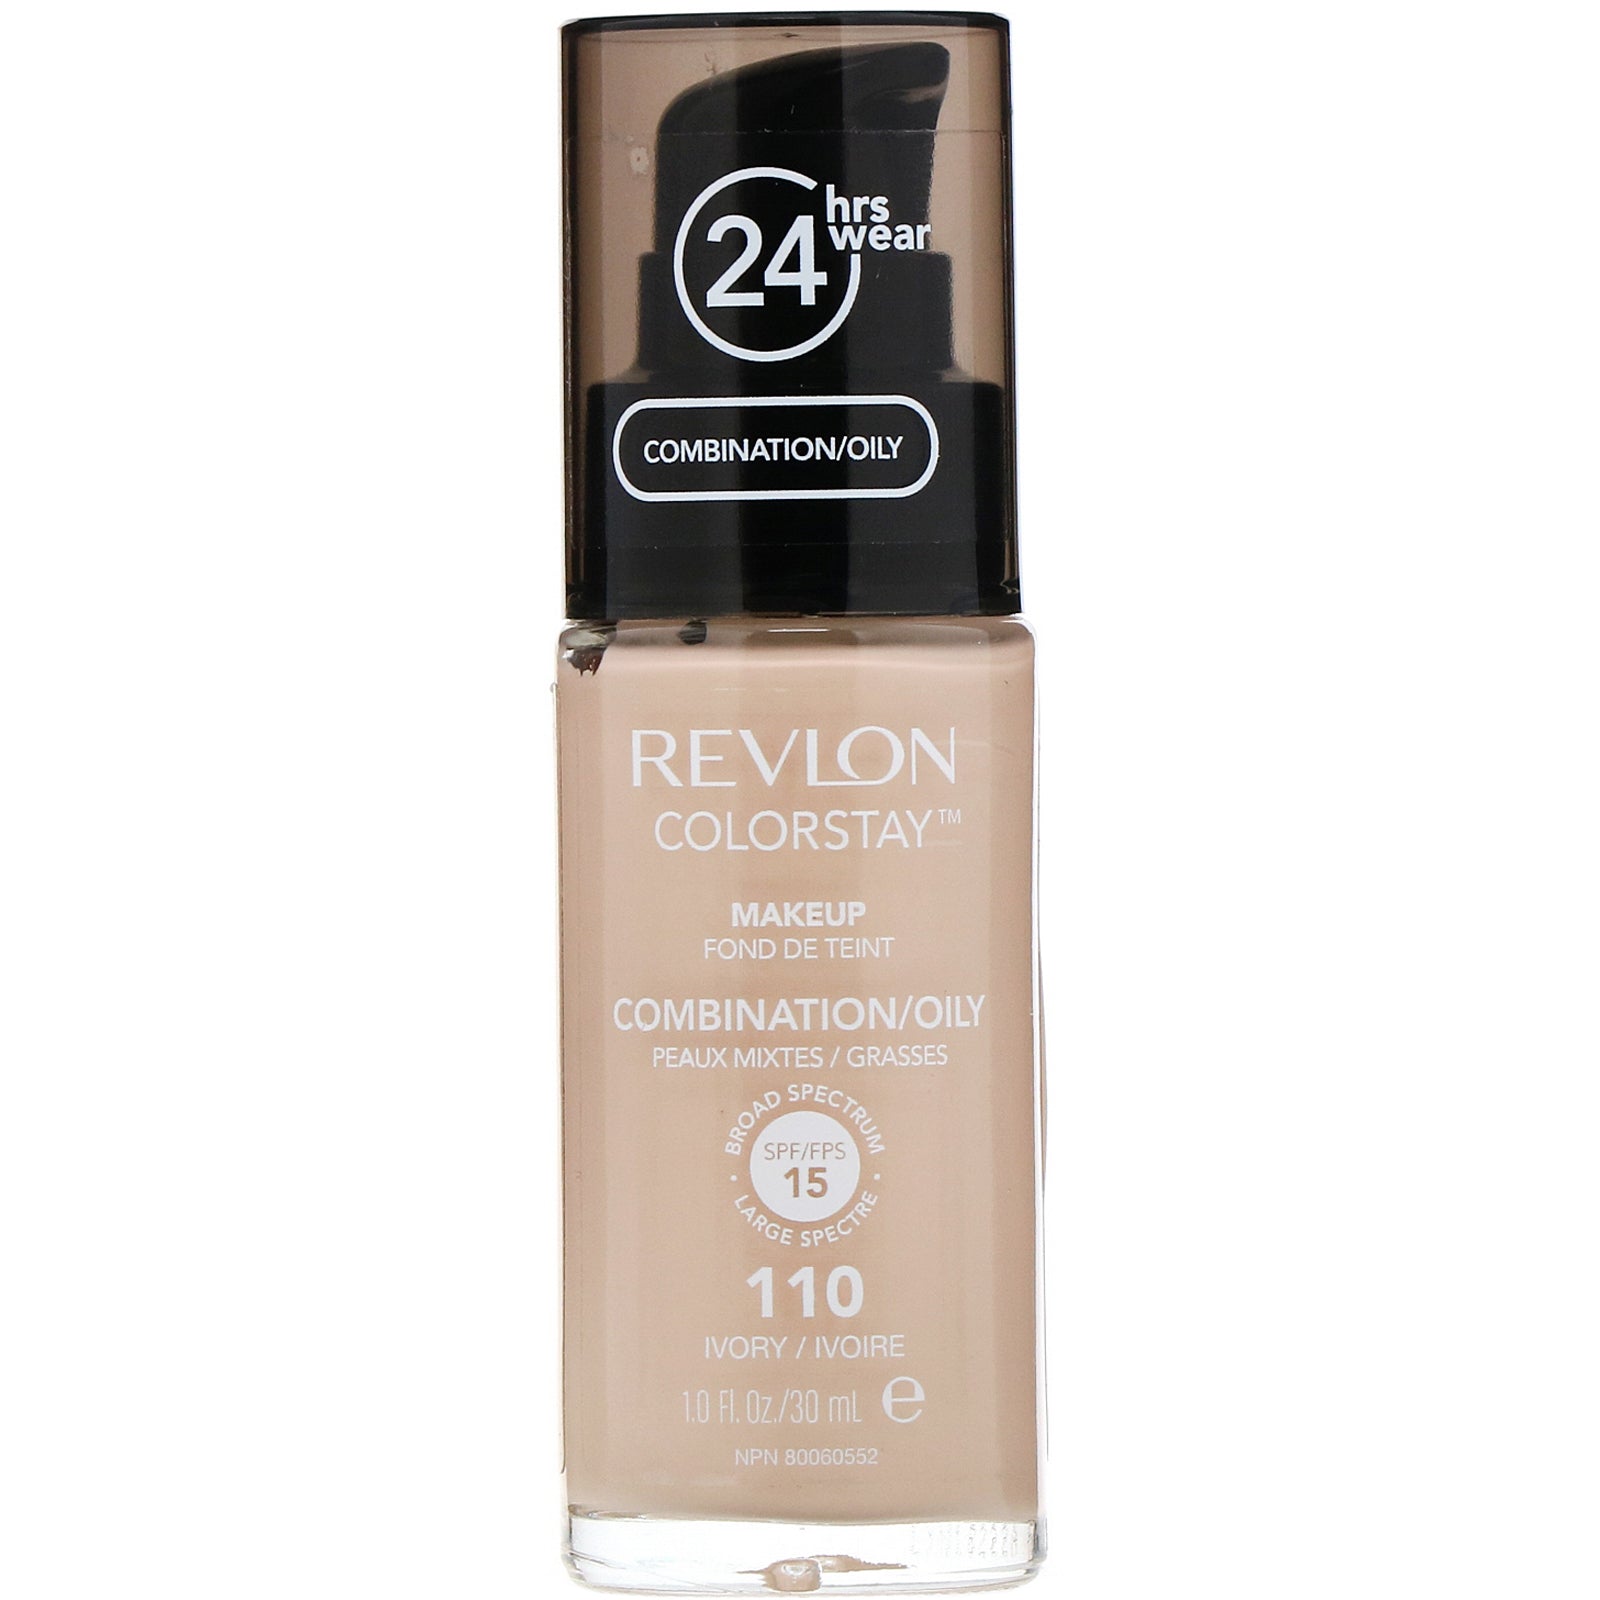 Revlon, Colorstay, Makeup, Combination/Oily, 110 Ivory, 1 fl oz (30 ml)